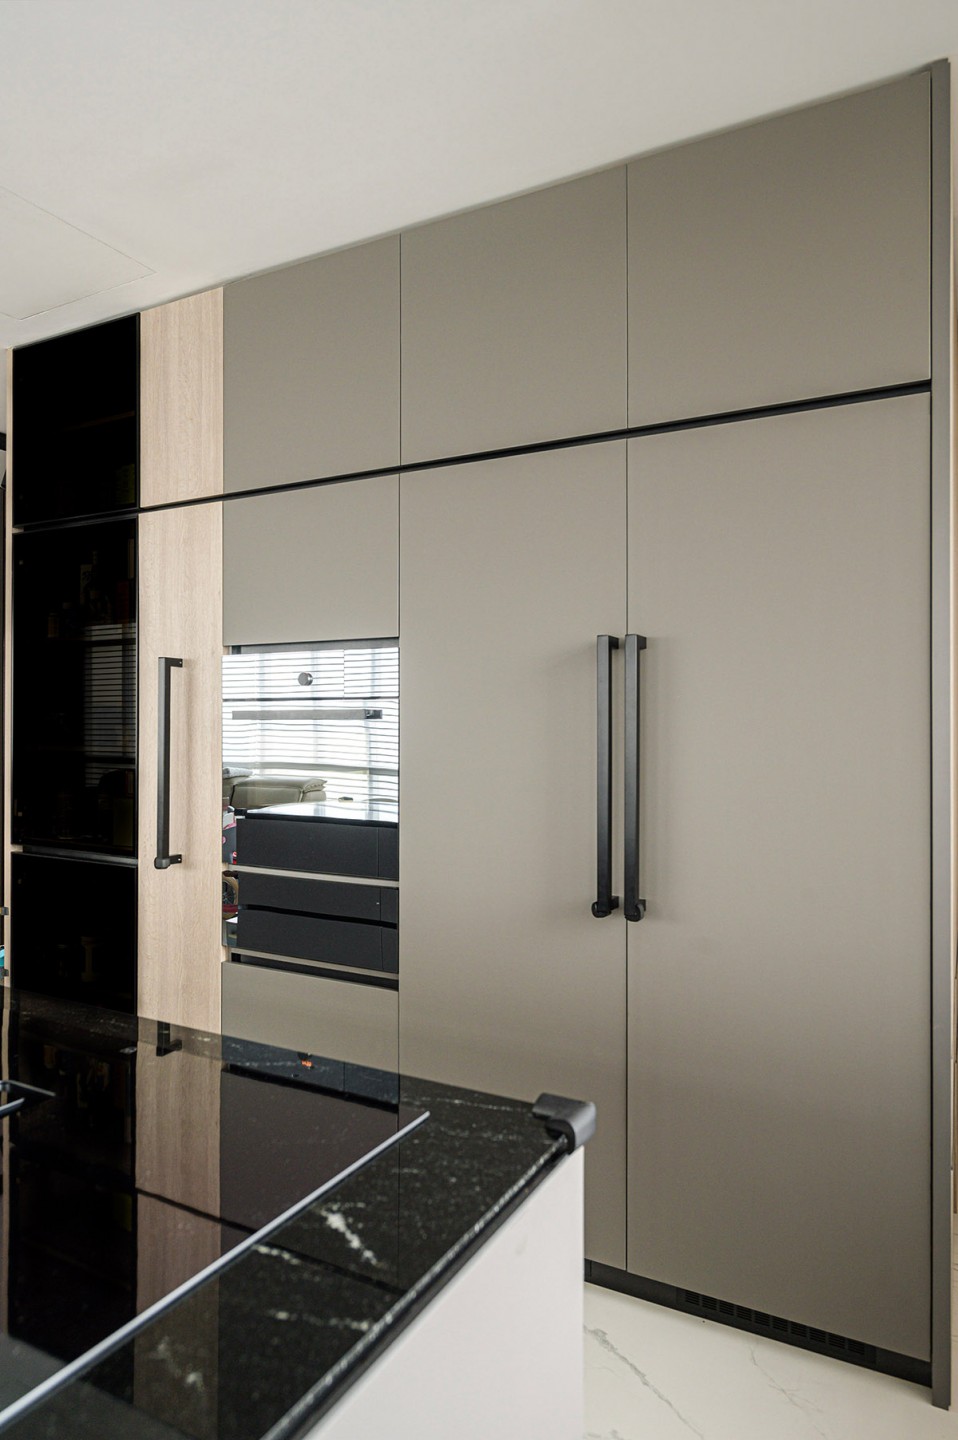 squarerooms v-zug vzug kitchen renovation homeowners interview appliances grey neutral colour palette design style open concept island